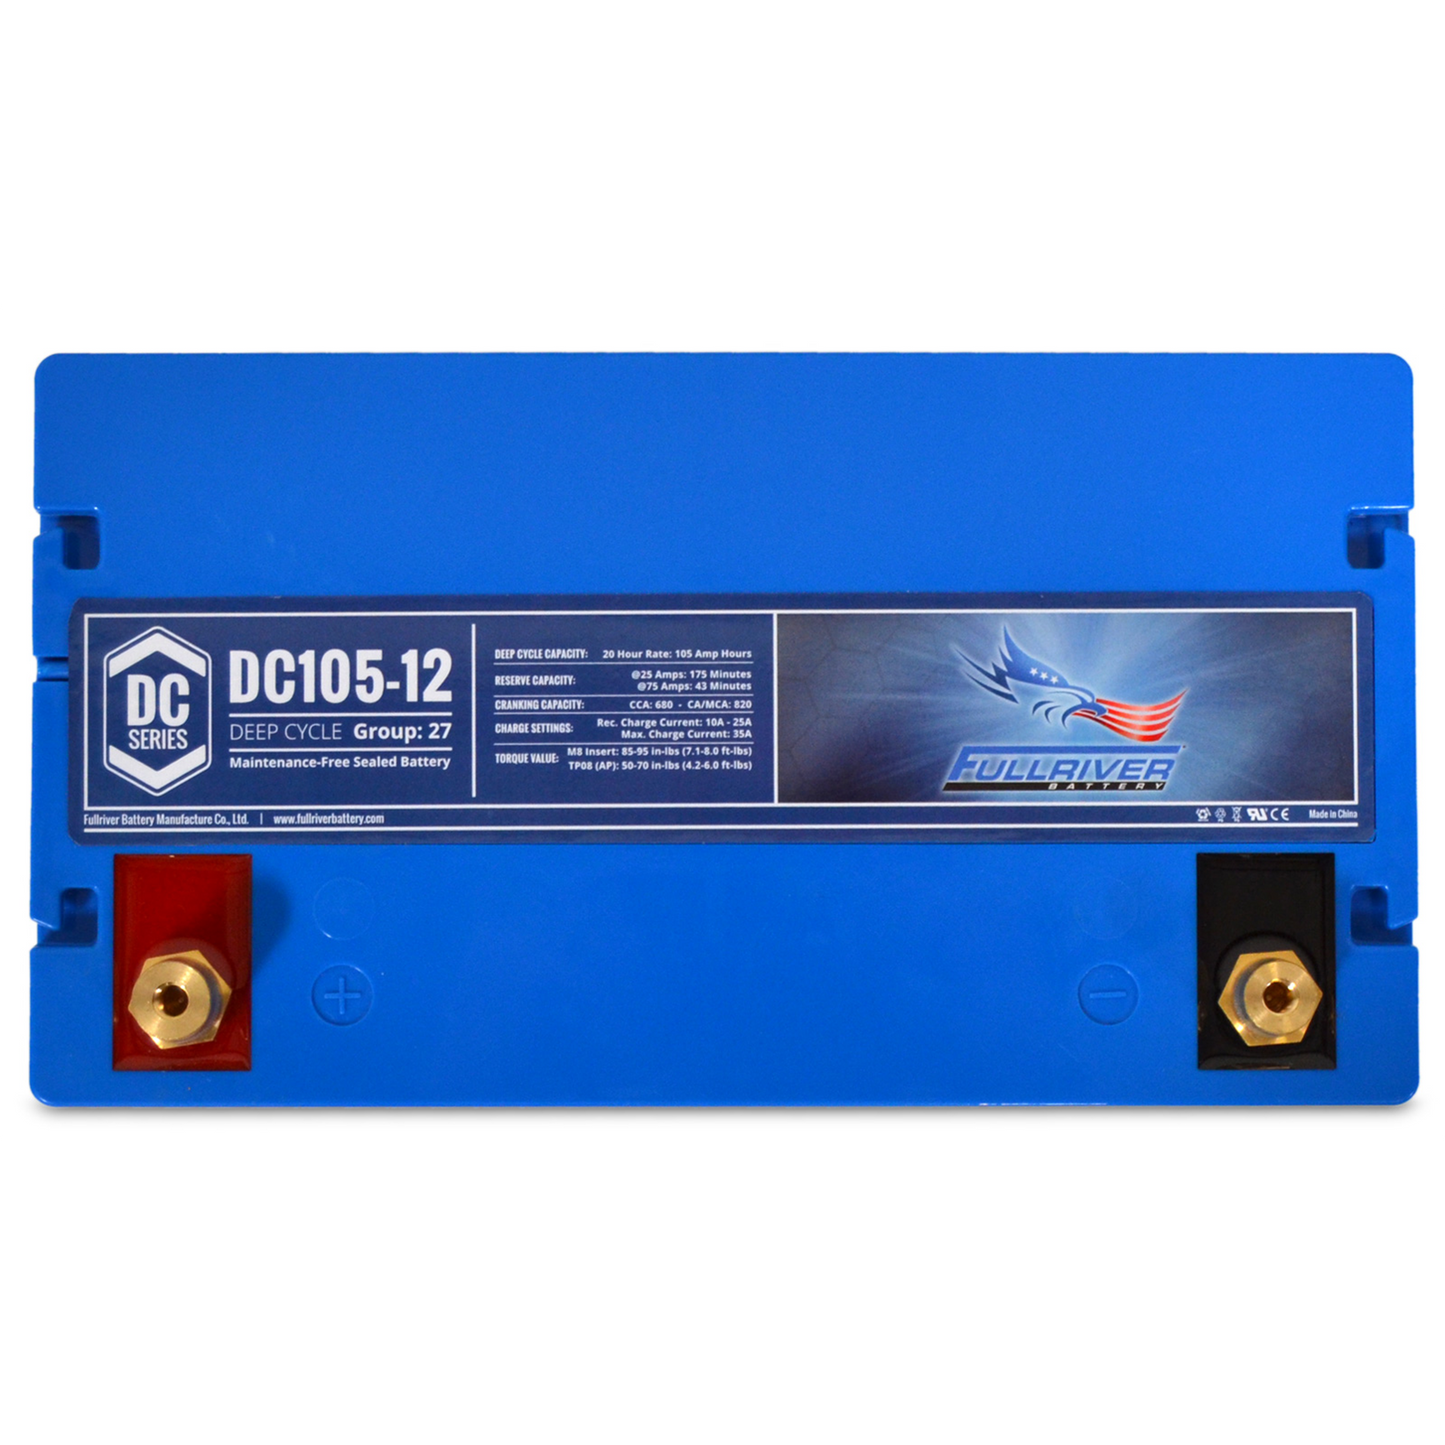 DC Series Battery 12V 105Ah Battery (DC105-12)